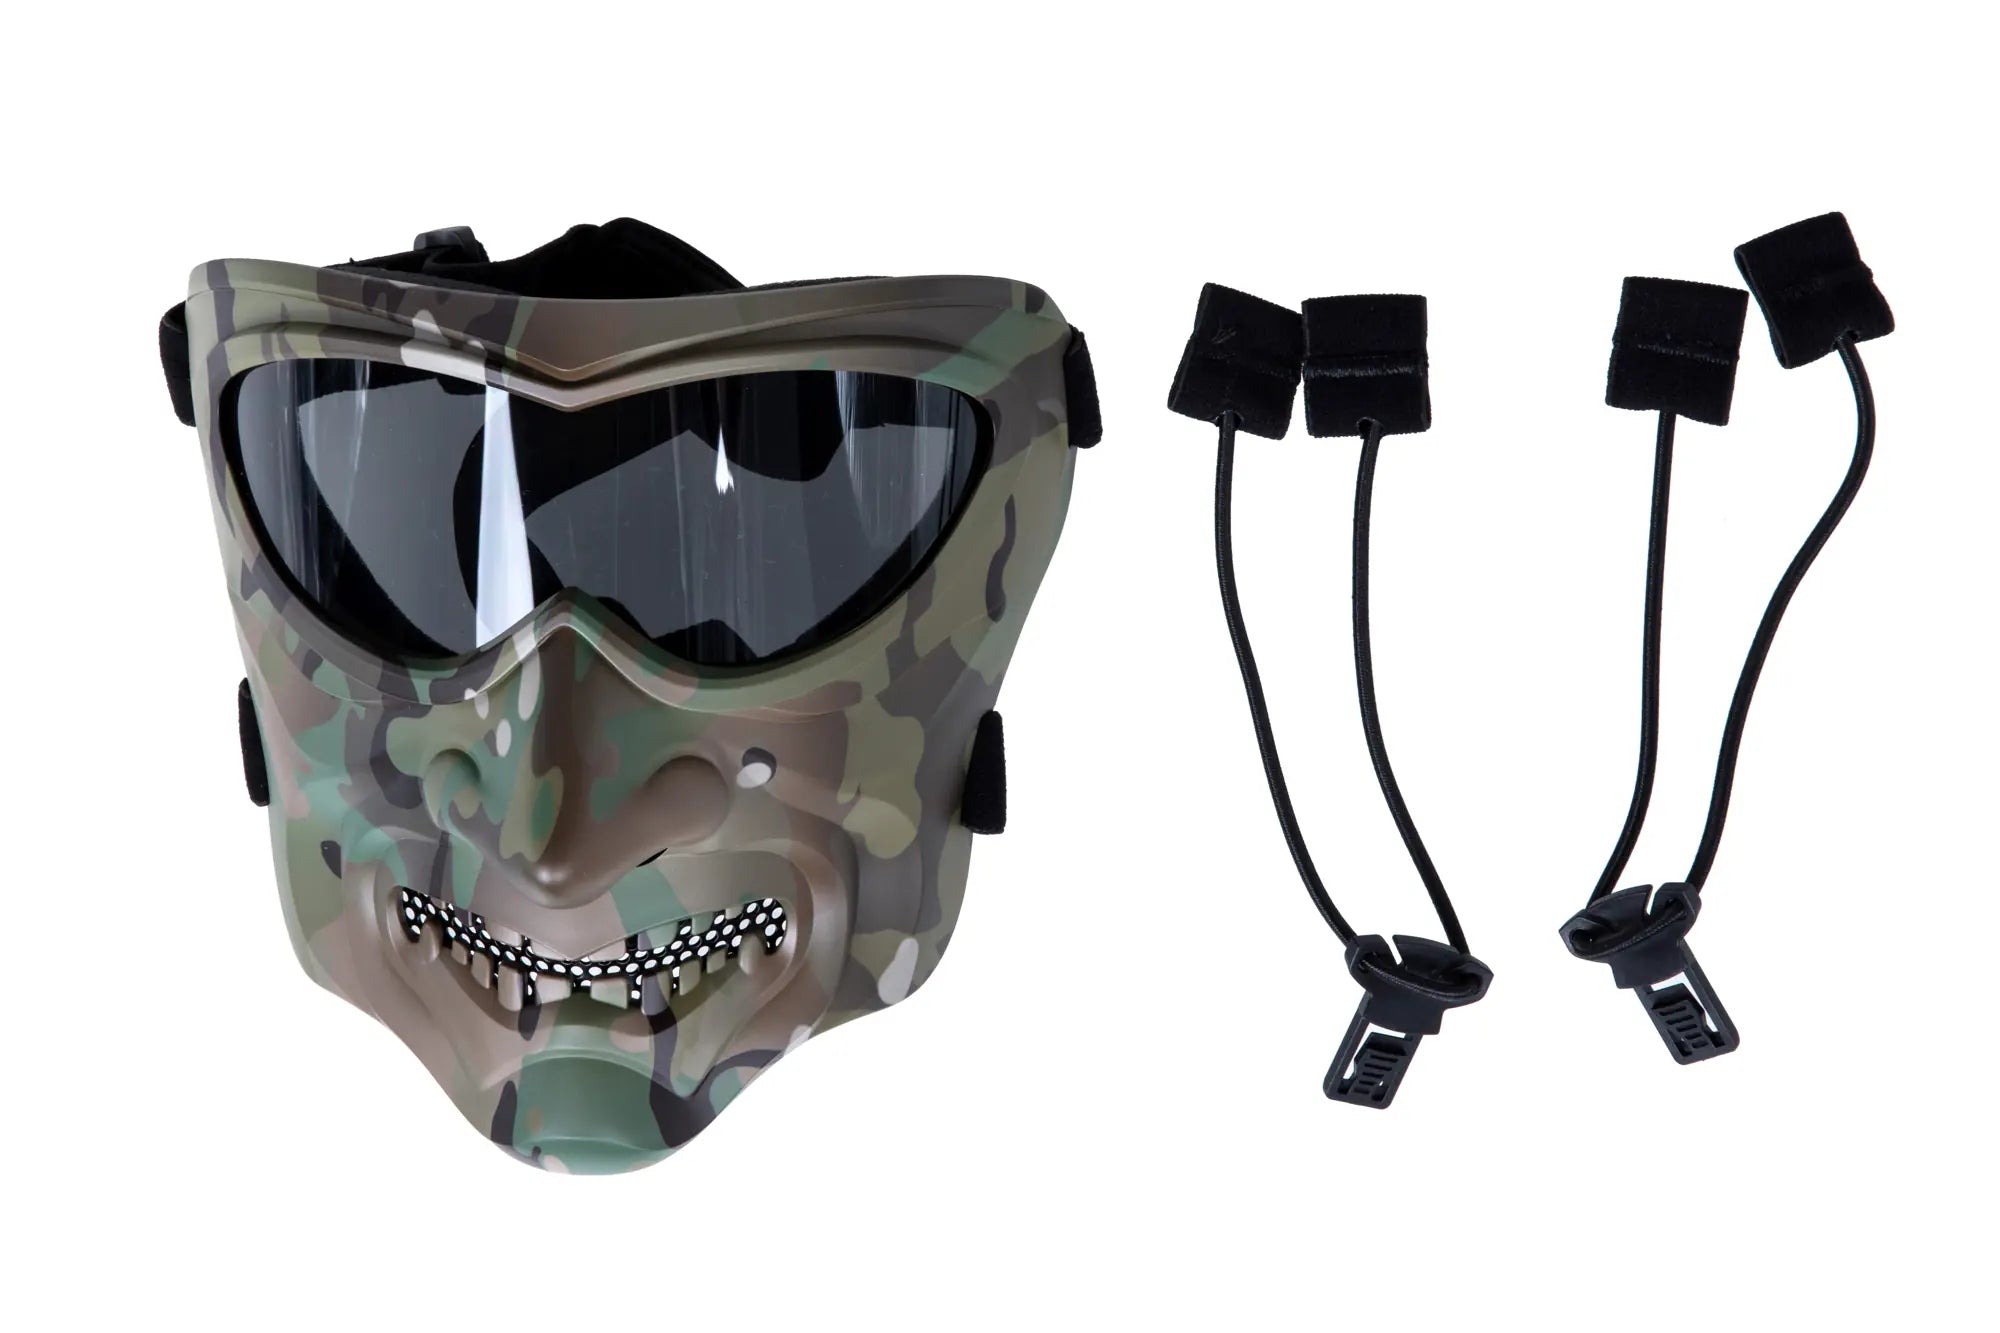 Night Knight Multicam mask